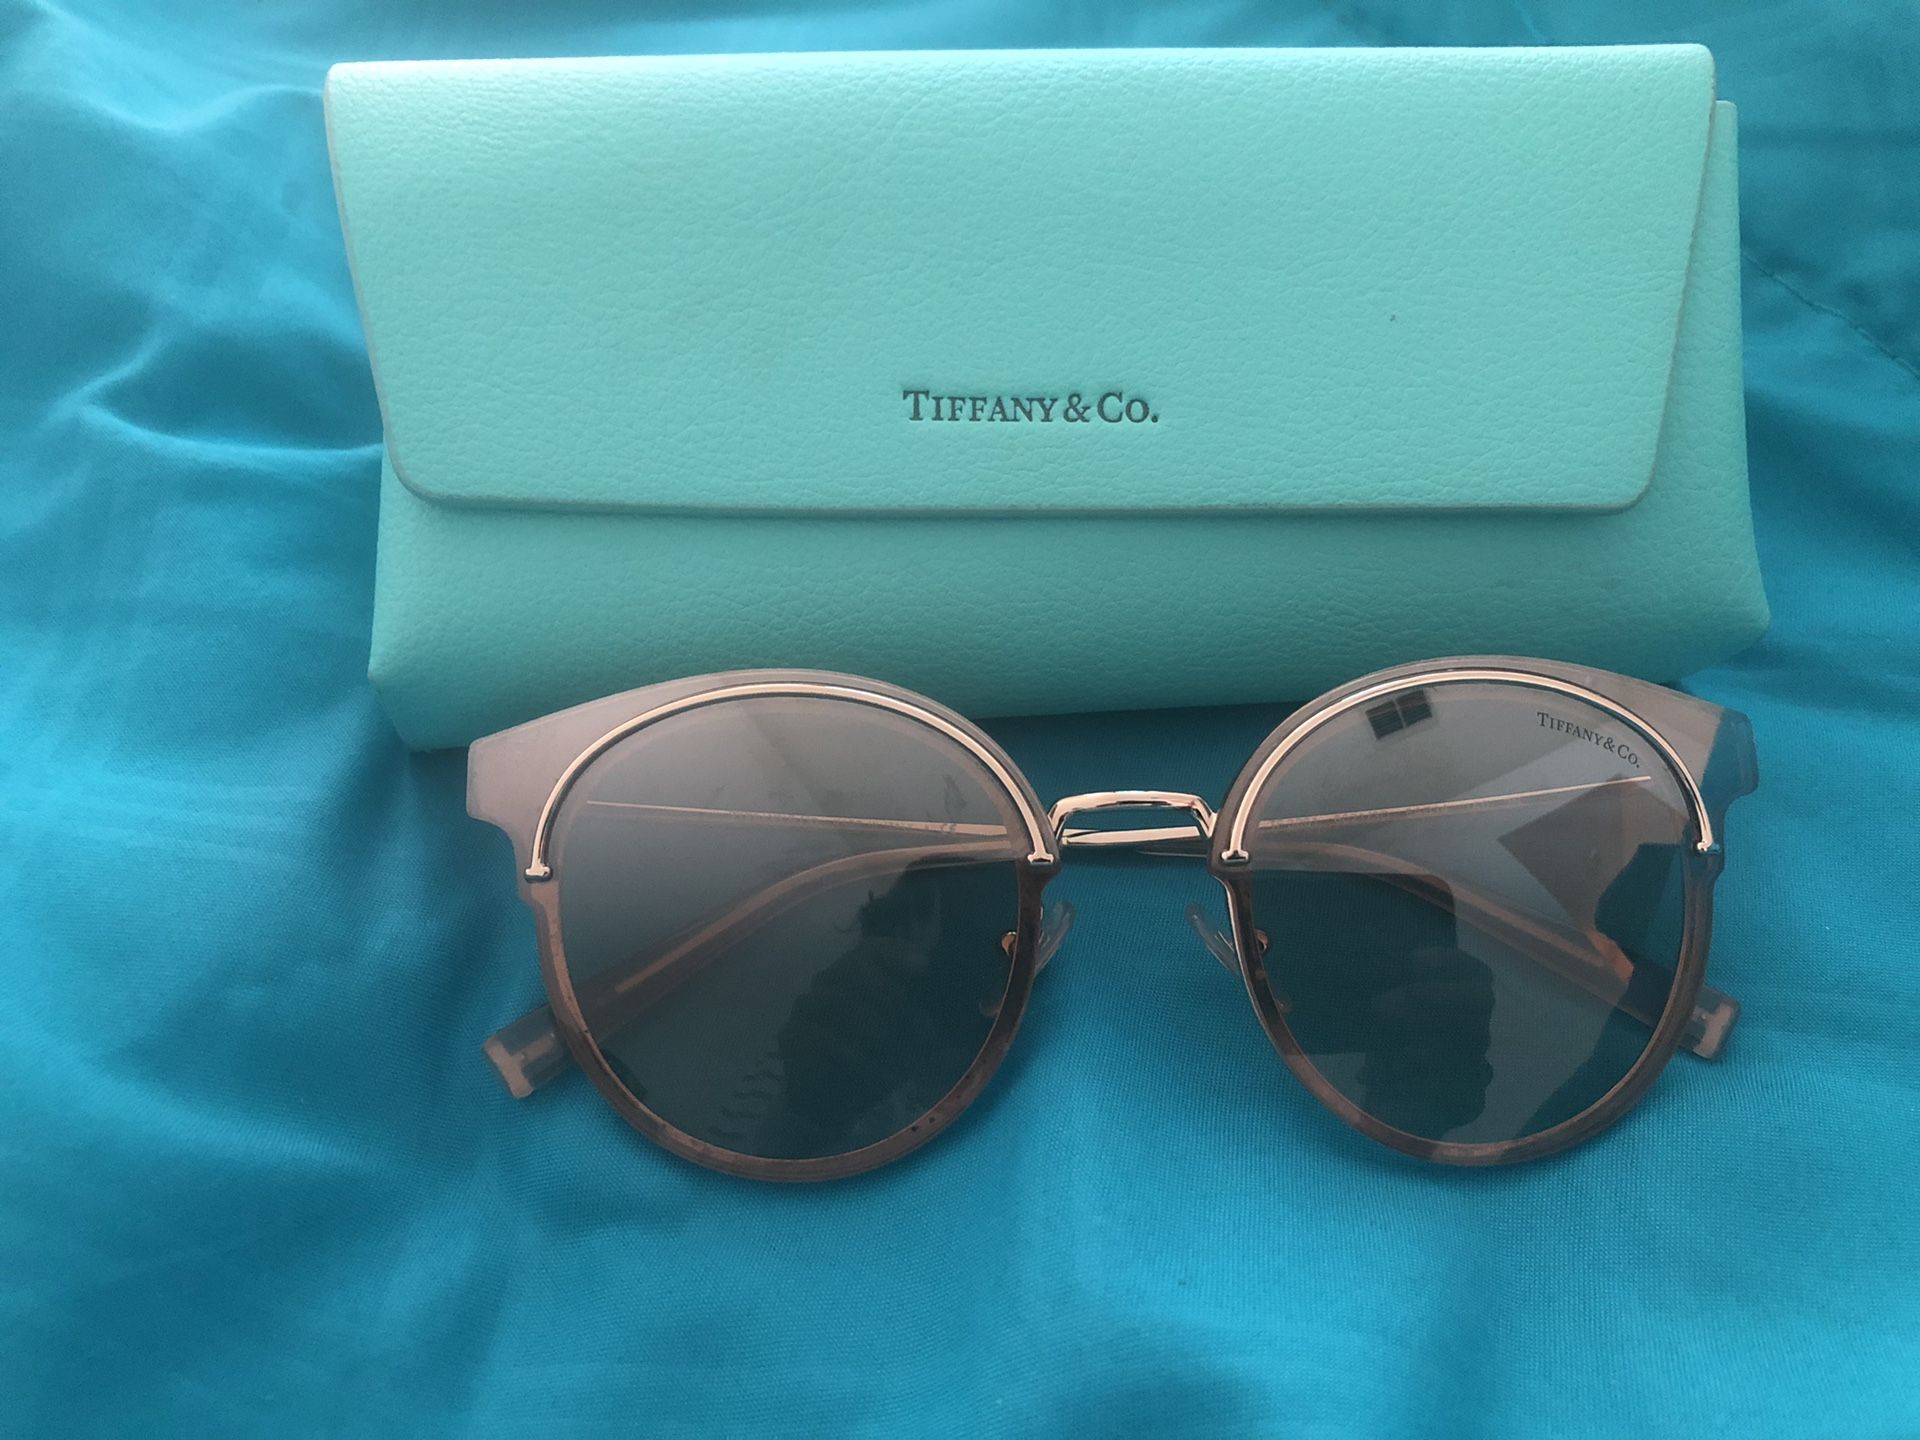 Authentic Tiffany & Co. Sunglasses